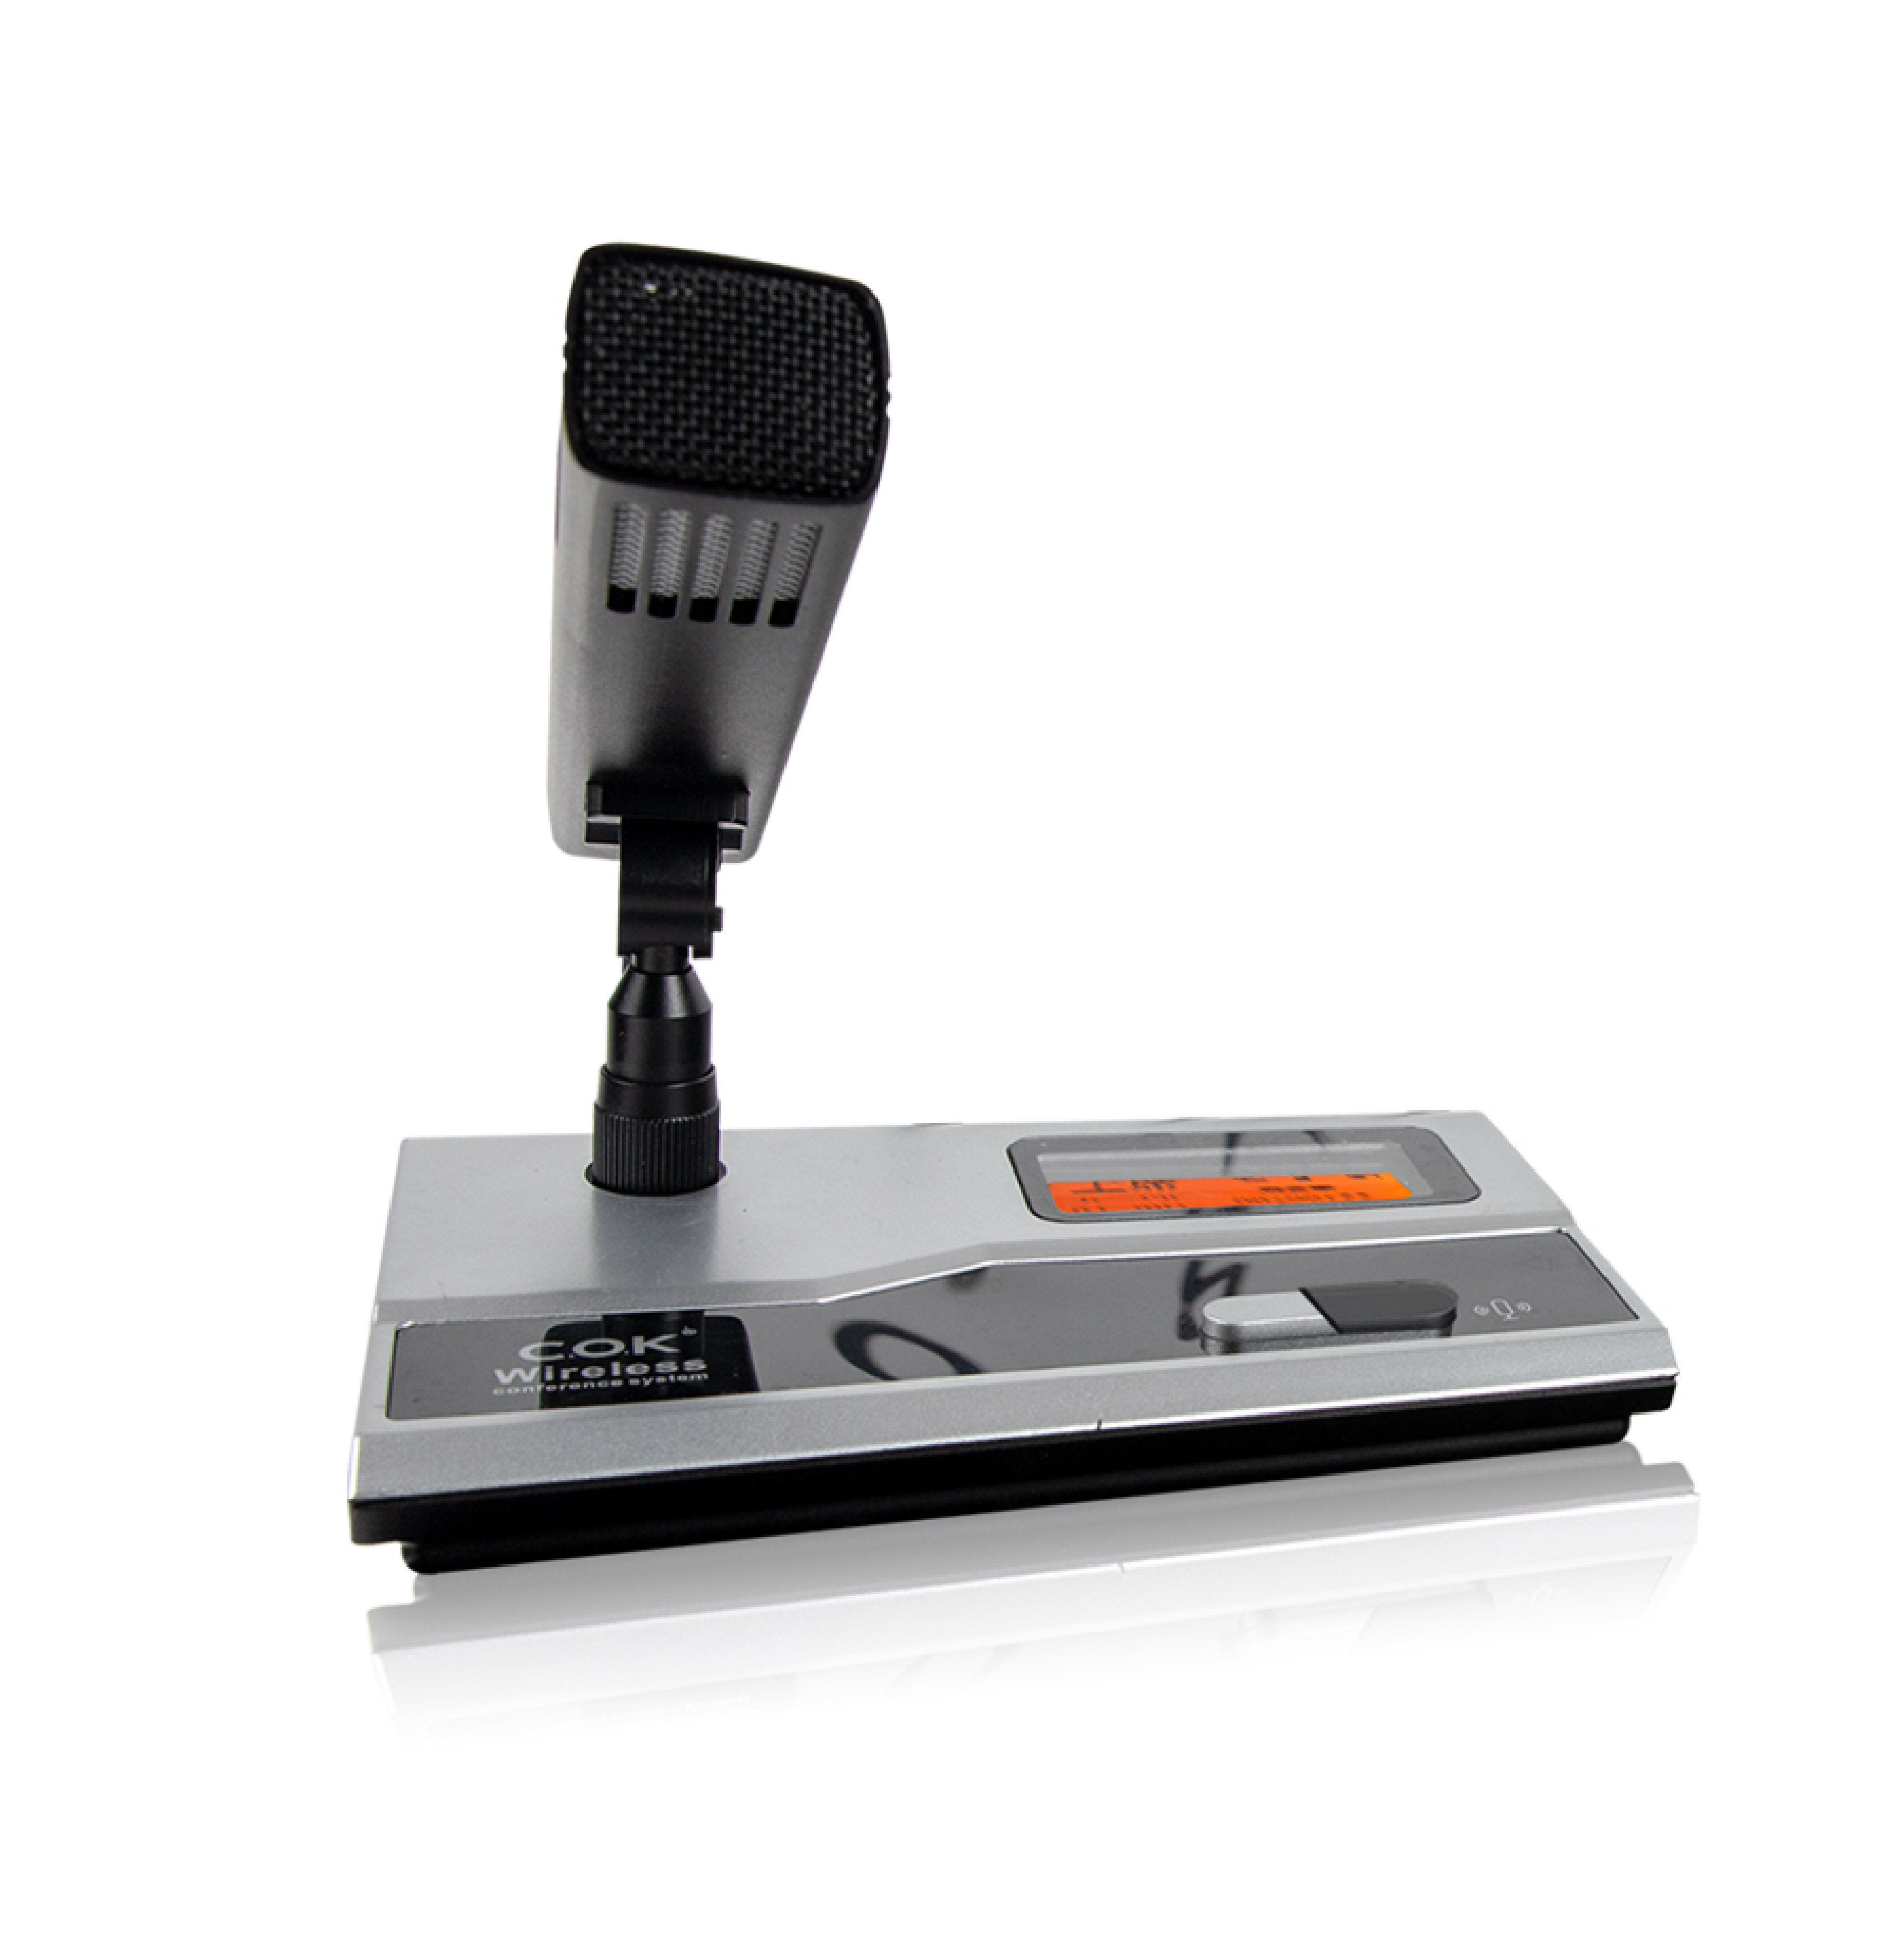 COK S-08P Microphone